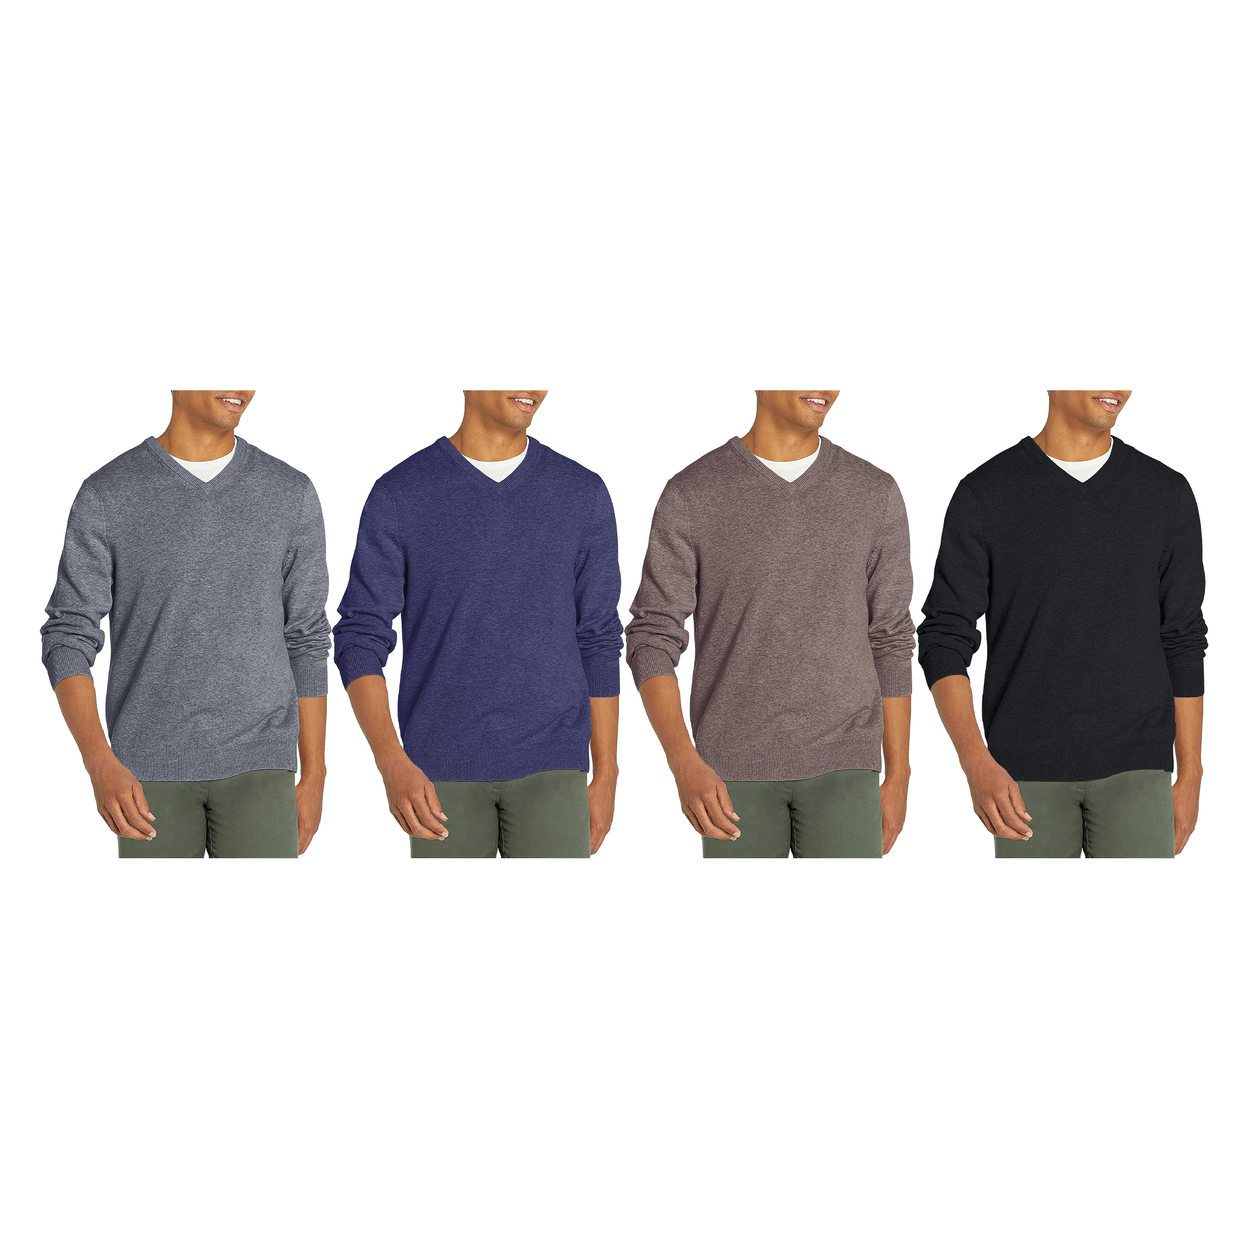 Men's Casual Ultra-Soft Slim Fit Warm Knit V-Neck Sweater - Black, Small